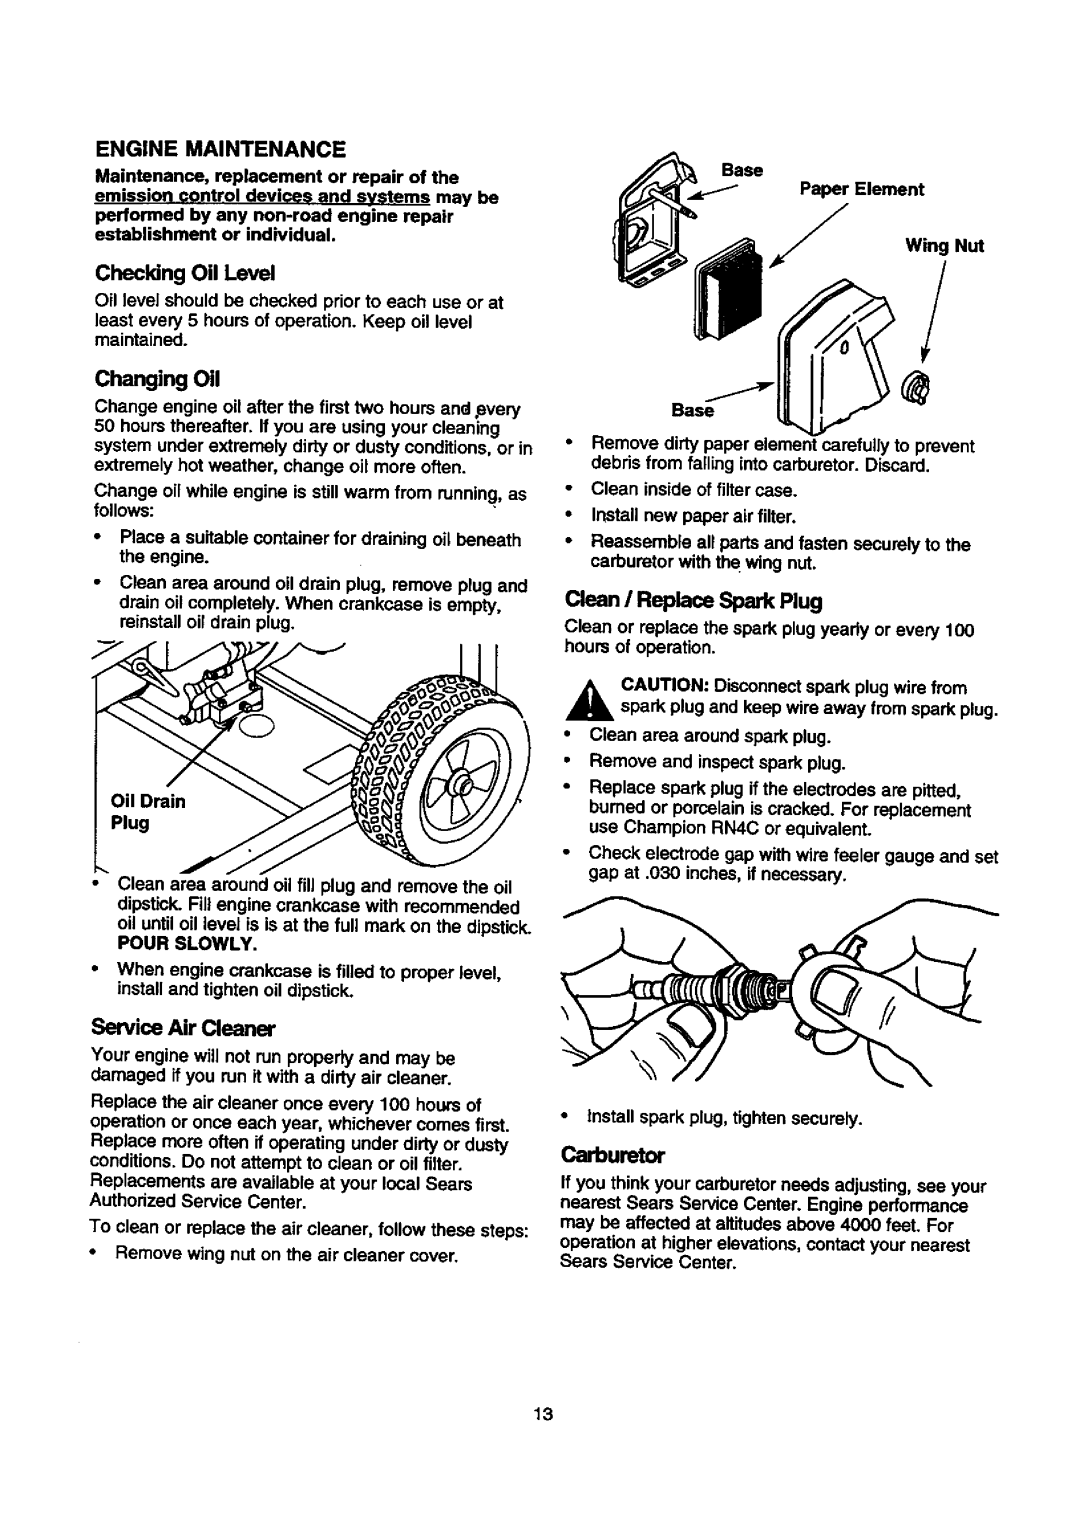 Craftsman 580.768030 operating instructions Changing Oil, Sen/me Air Cleaner, Carburetor 